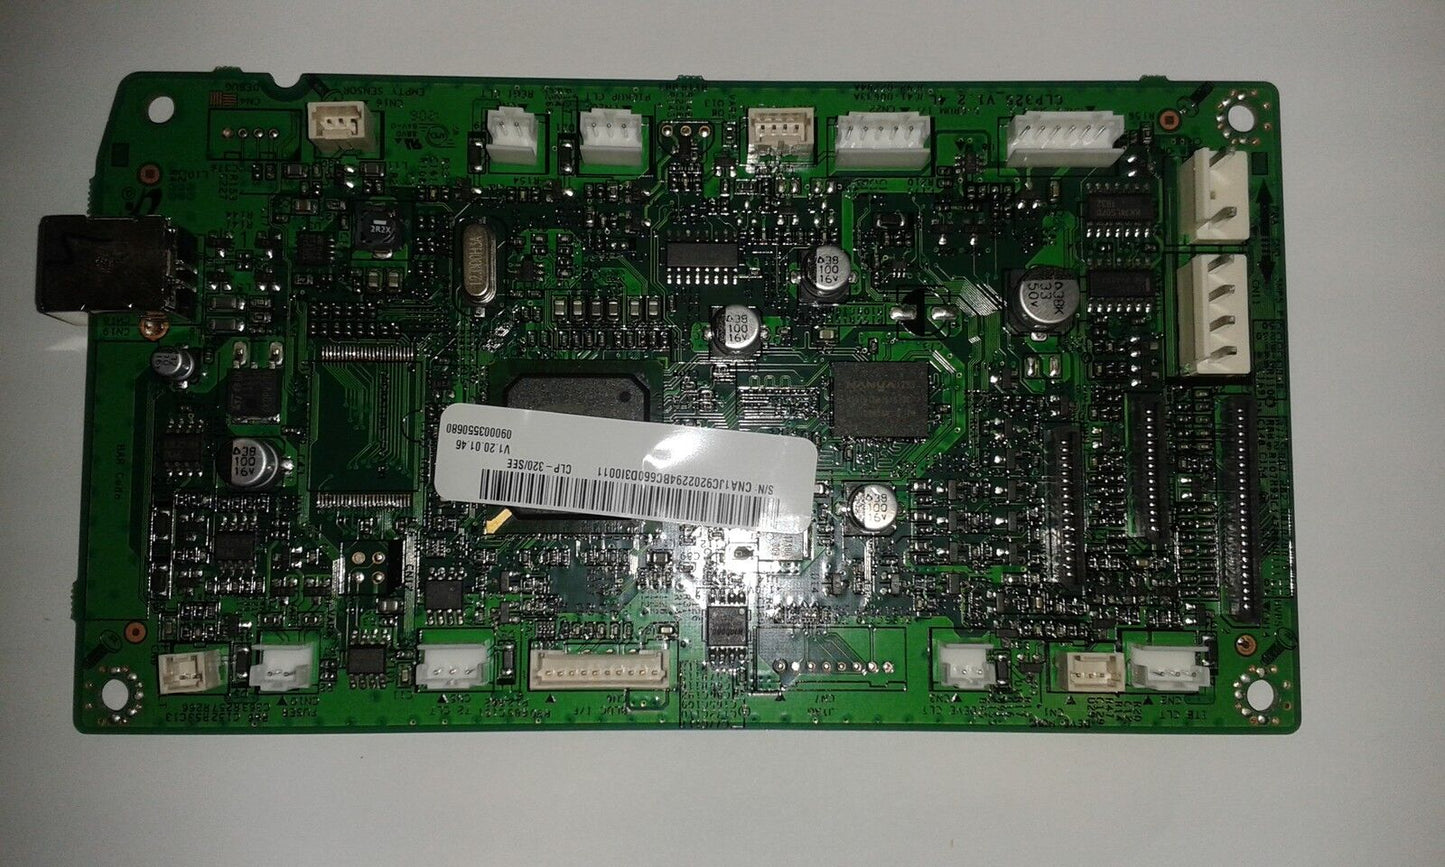 jc92-02294b main board originale per stampante samsung clp-320 clp-325 ricambio